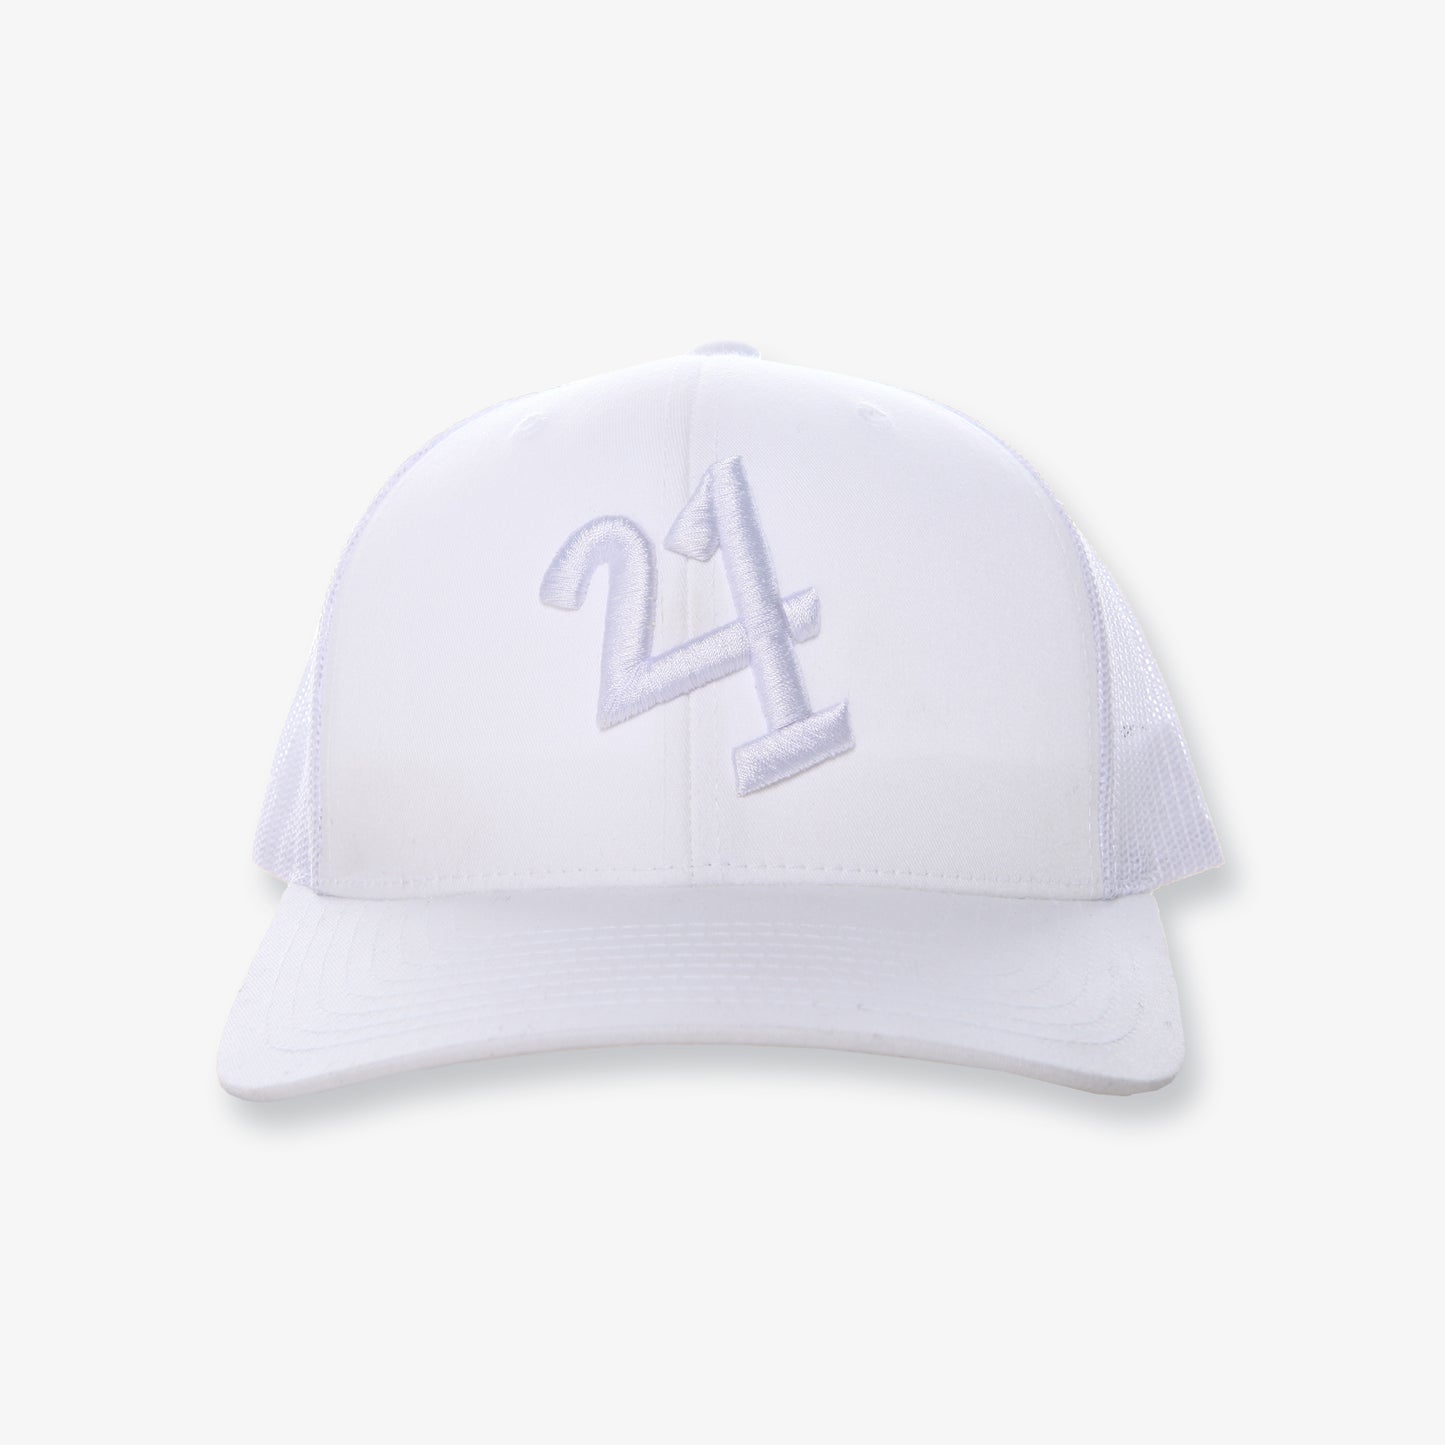 421 Mesh Hat - White